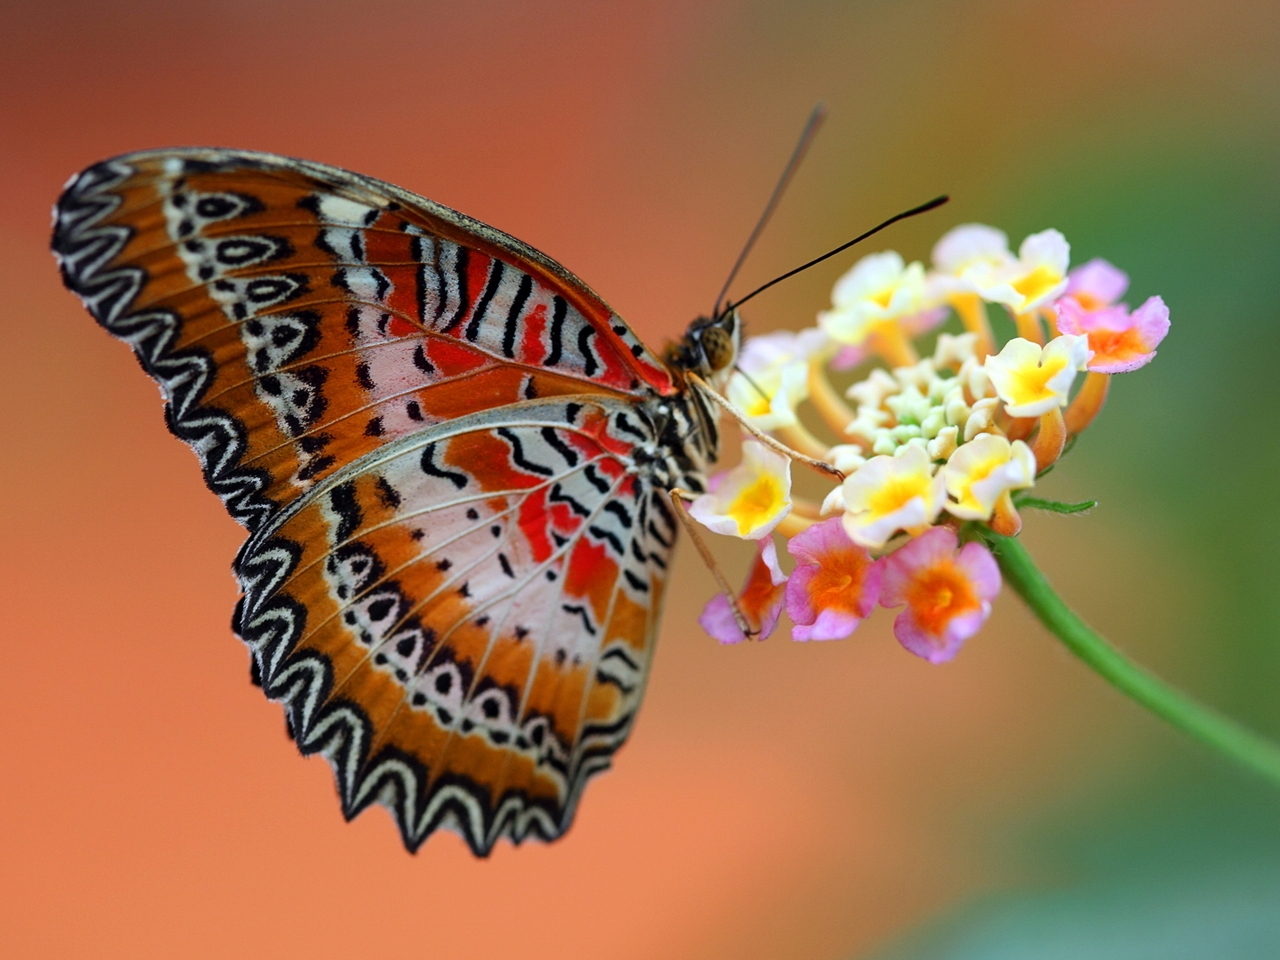 Картинка: Бабочка, крылья, окрас, яркий, цветок, размытый, фон